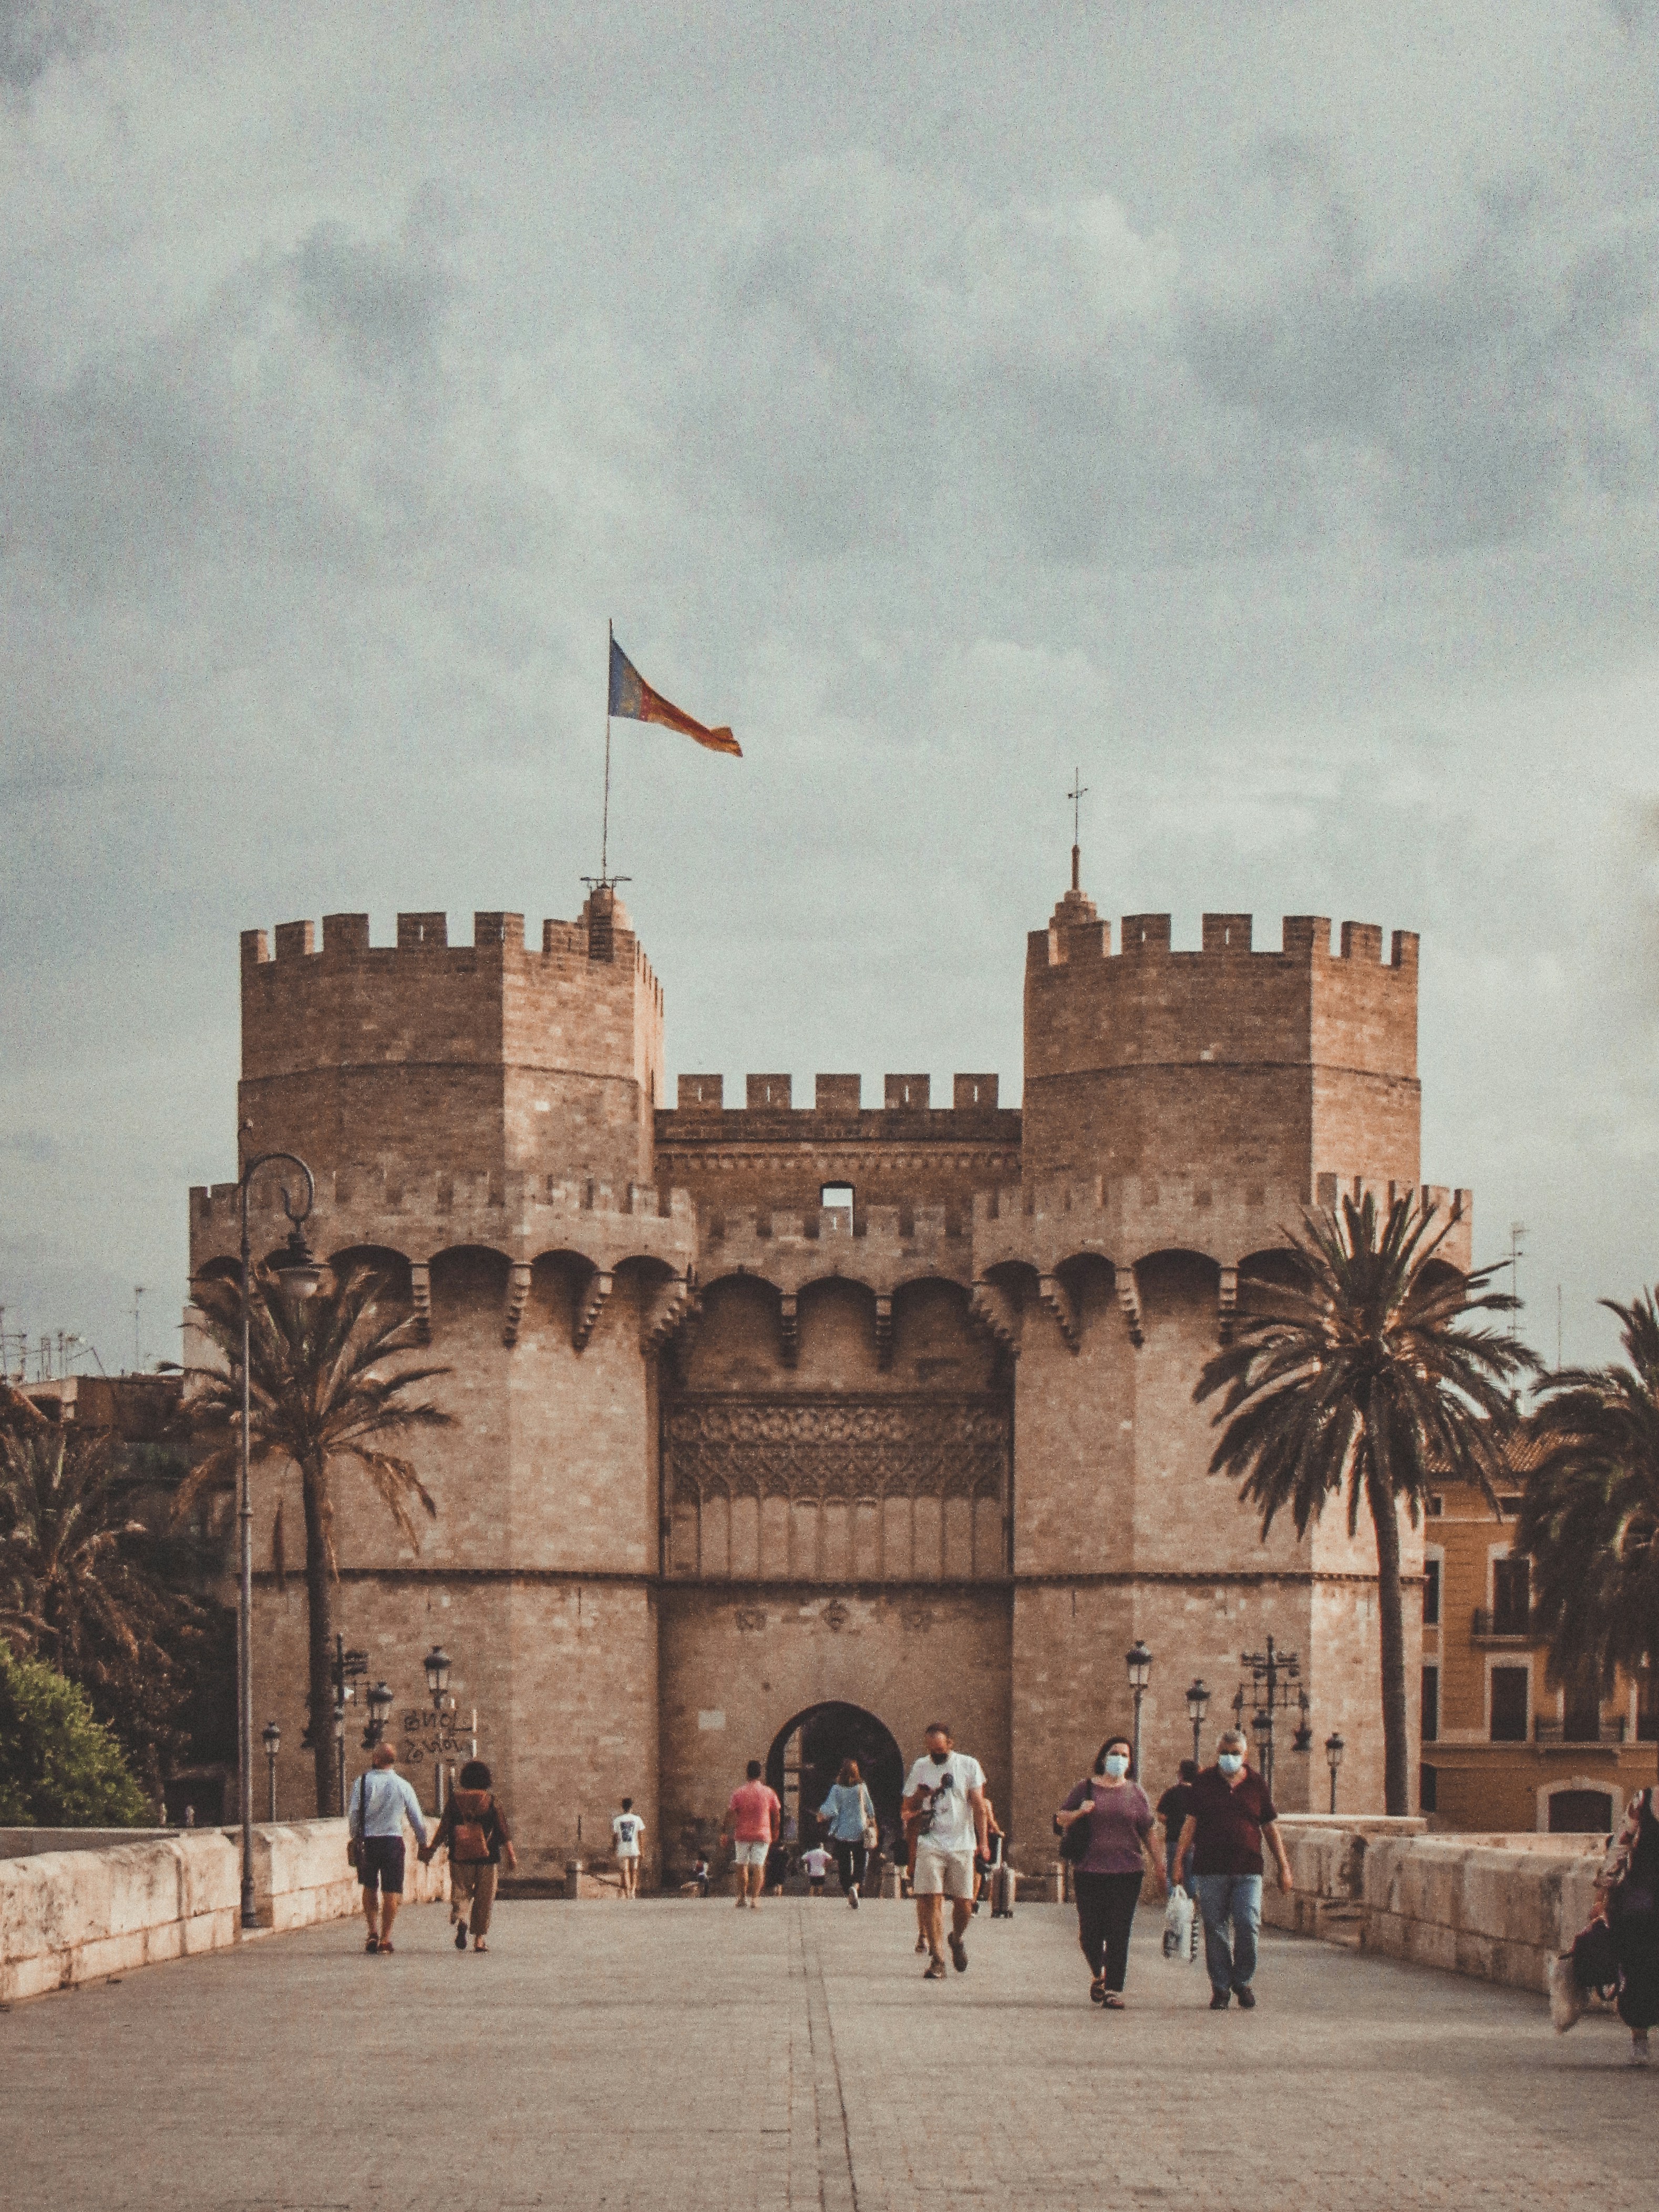 Torre de Serranos is the pricipal path entrance to Valencia's old city